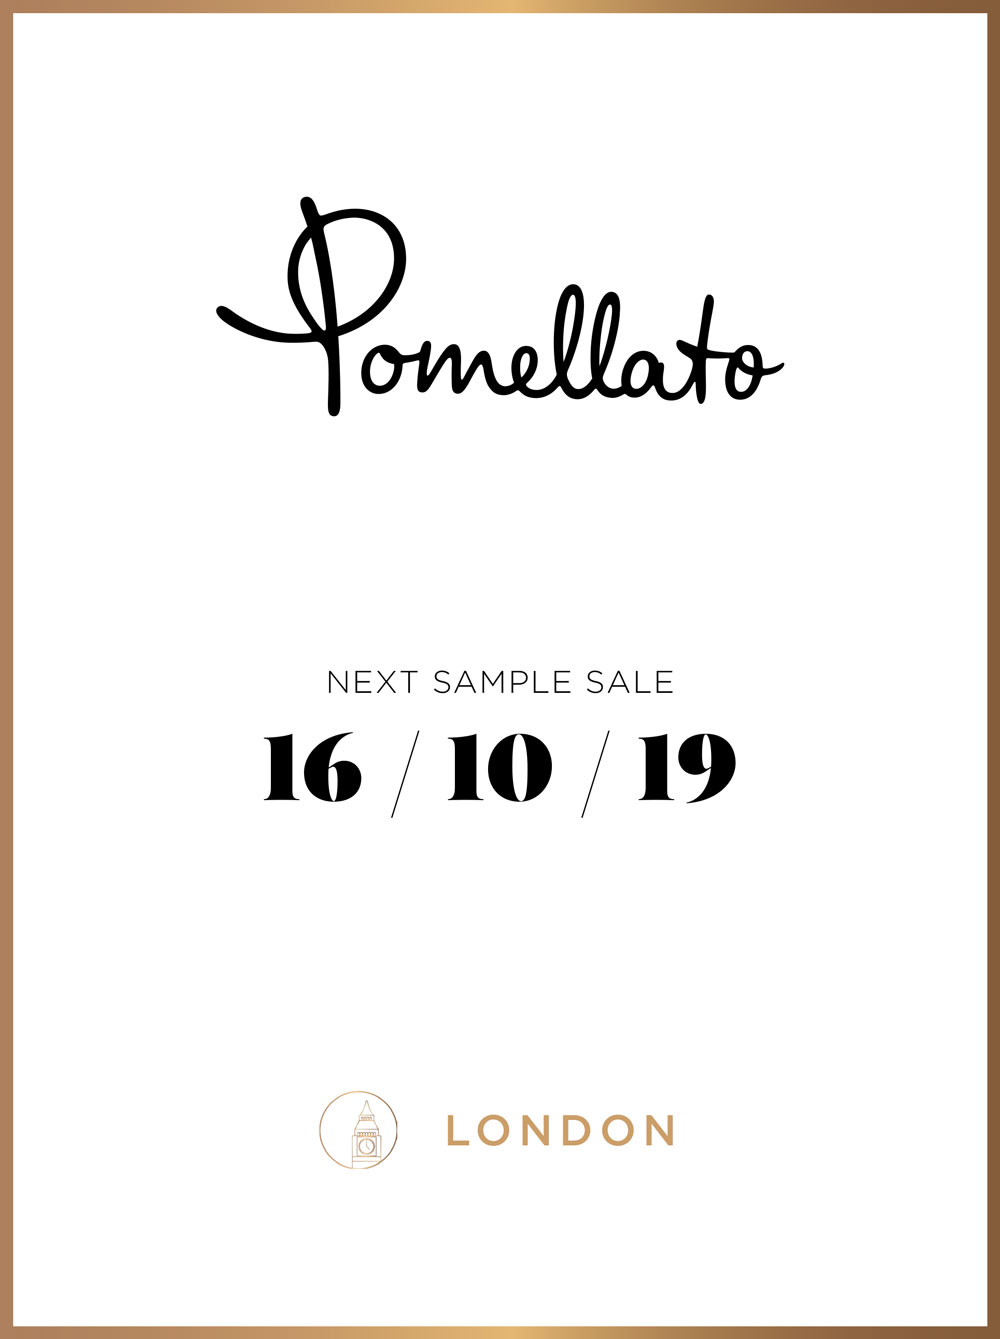 All London Sample Sales